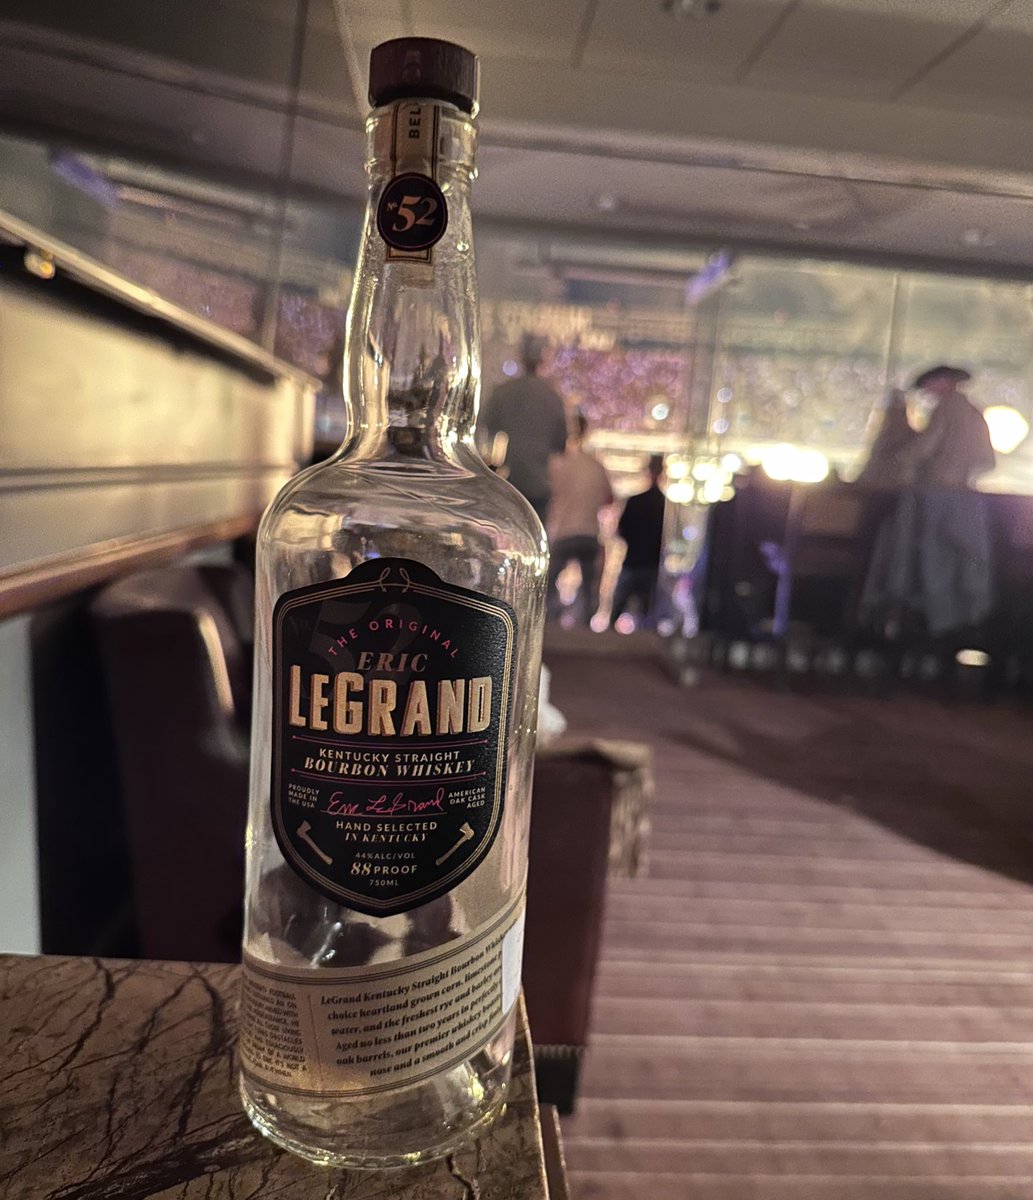 Last night we let the liquor talk // @MorganWallen x @MetLifeStadium